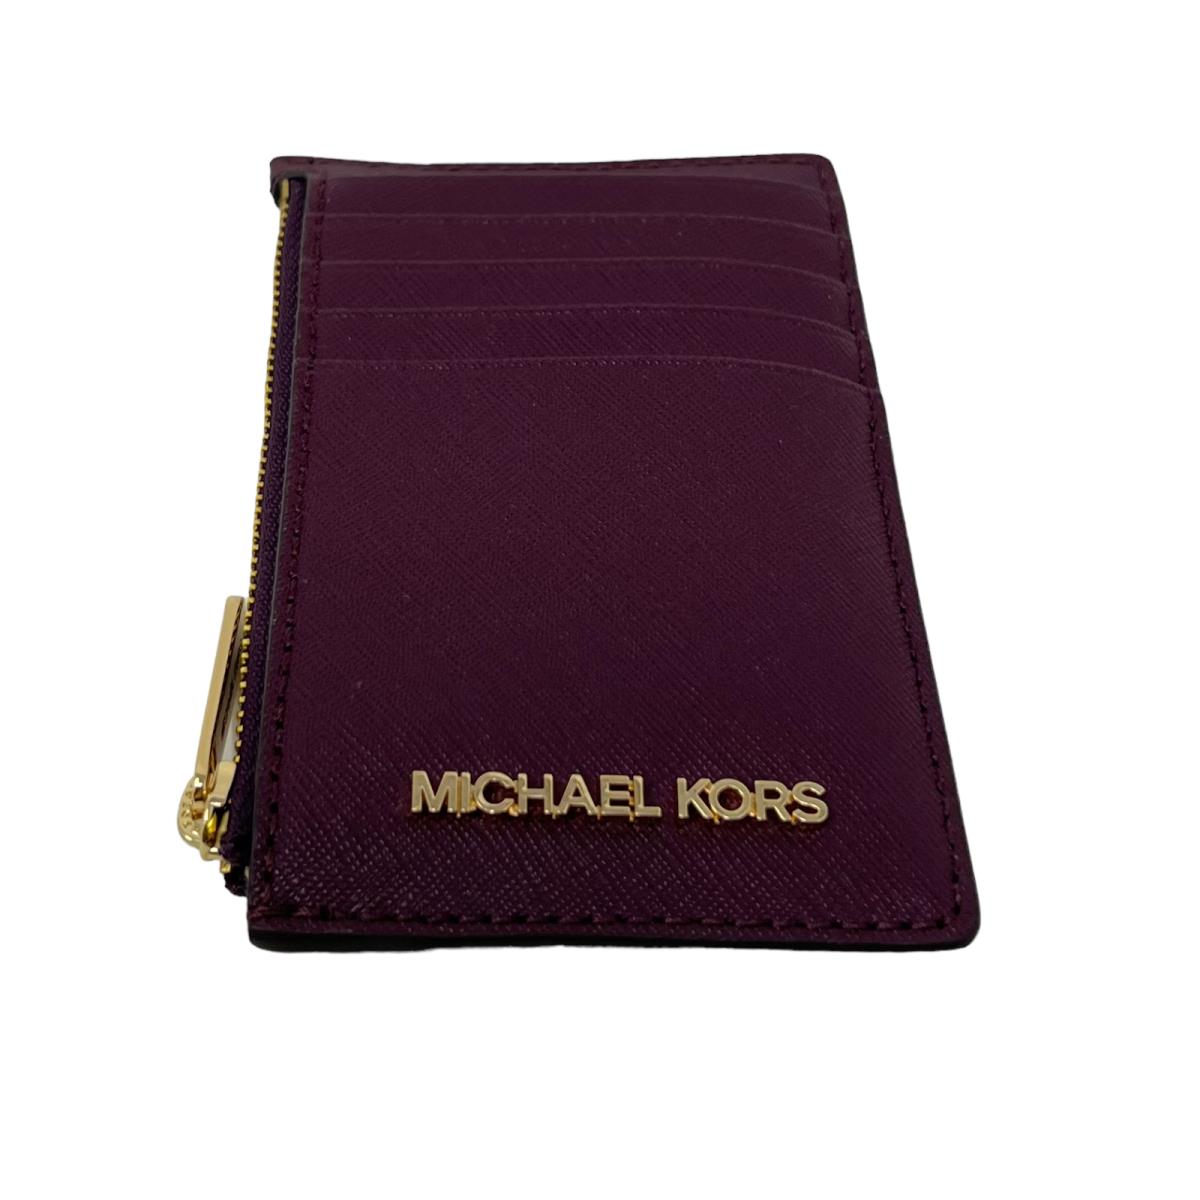 Michael Kors wallet  - Brown, Pink, Vanilla, Black 6